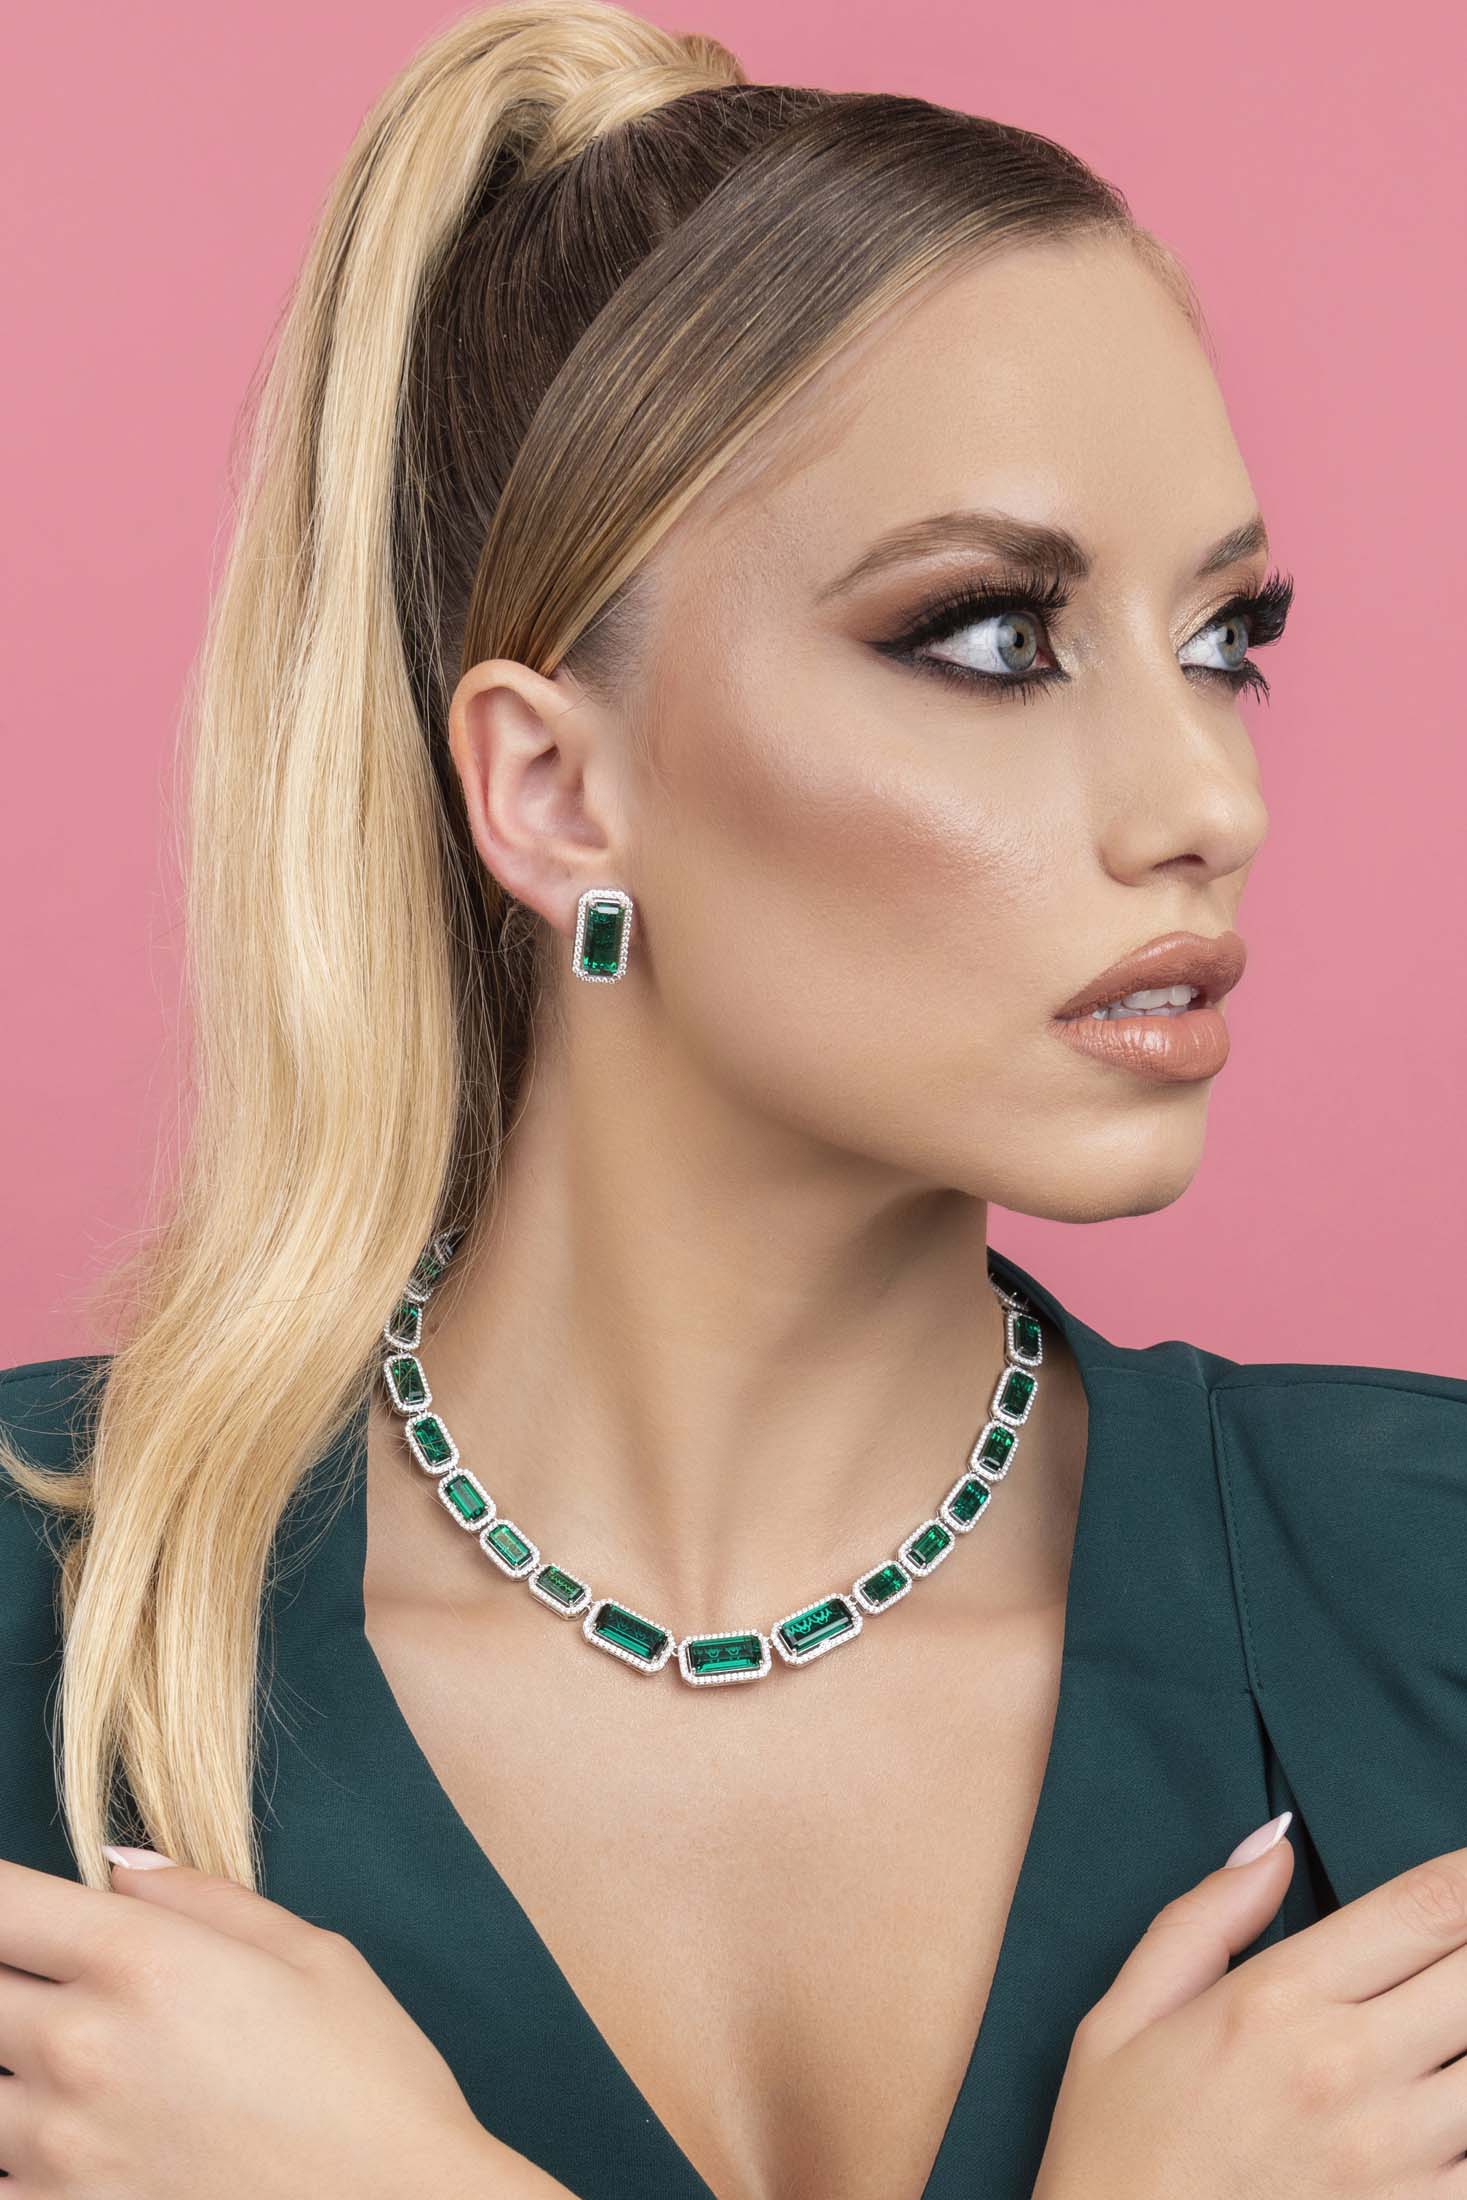 Emerald Elegance Statement Stud Earring Set